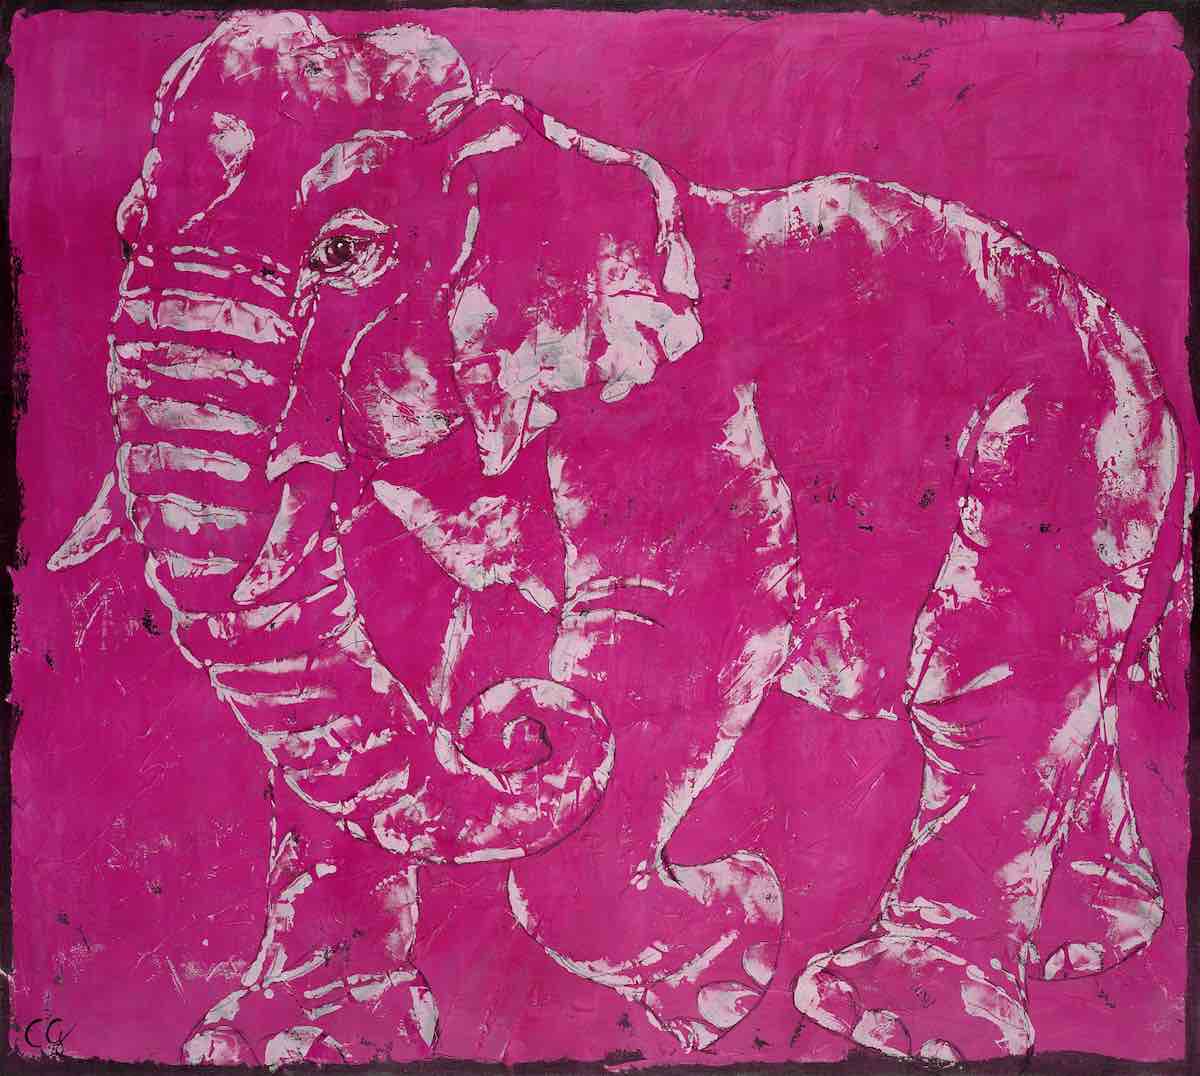 Elefanten Portrait von Claudia Groegler in pink rot